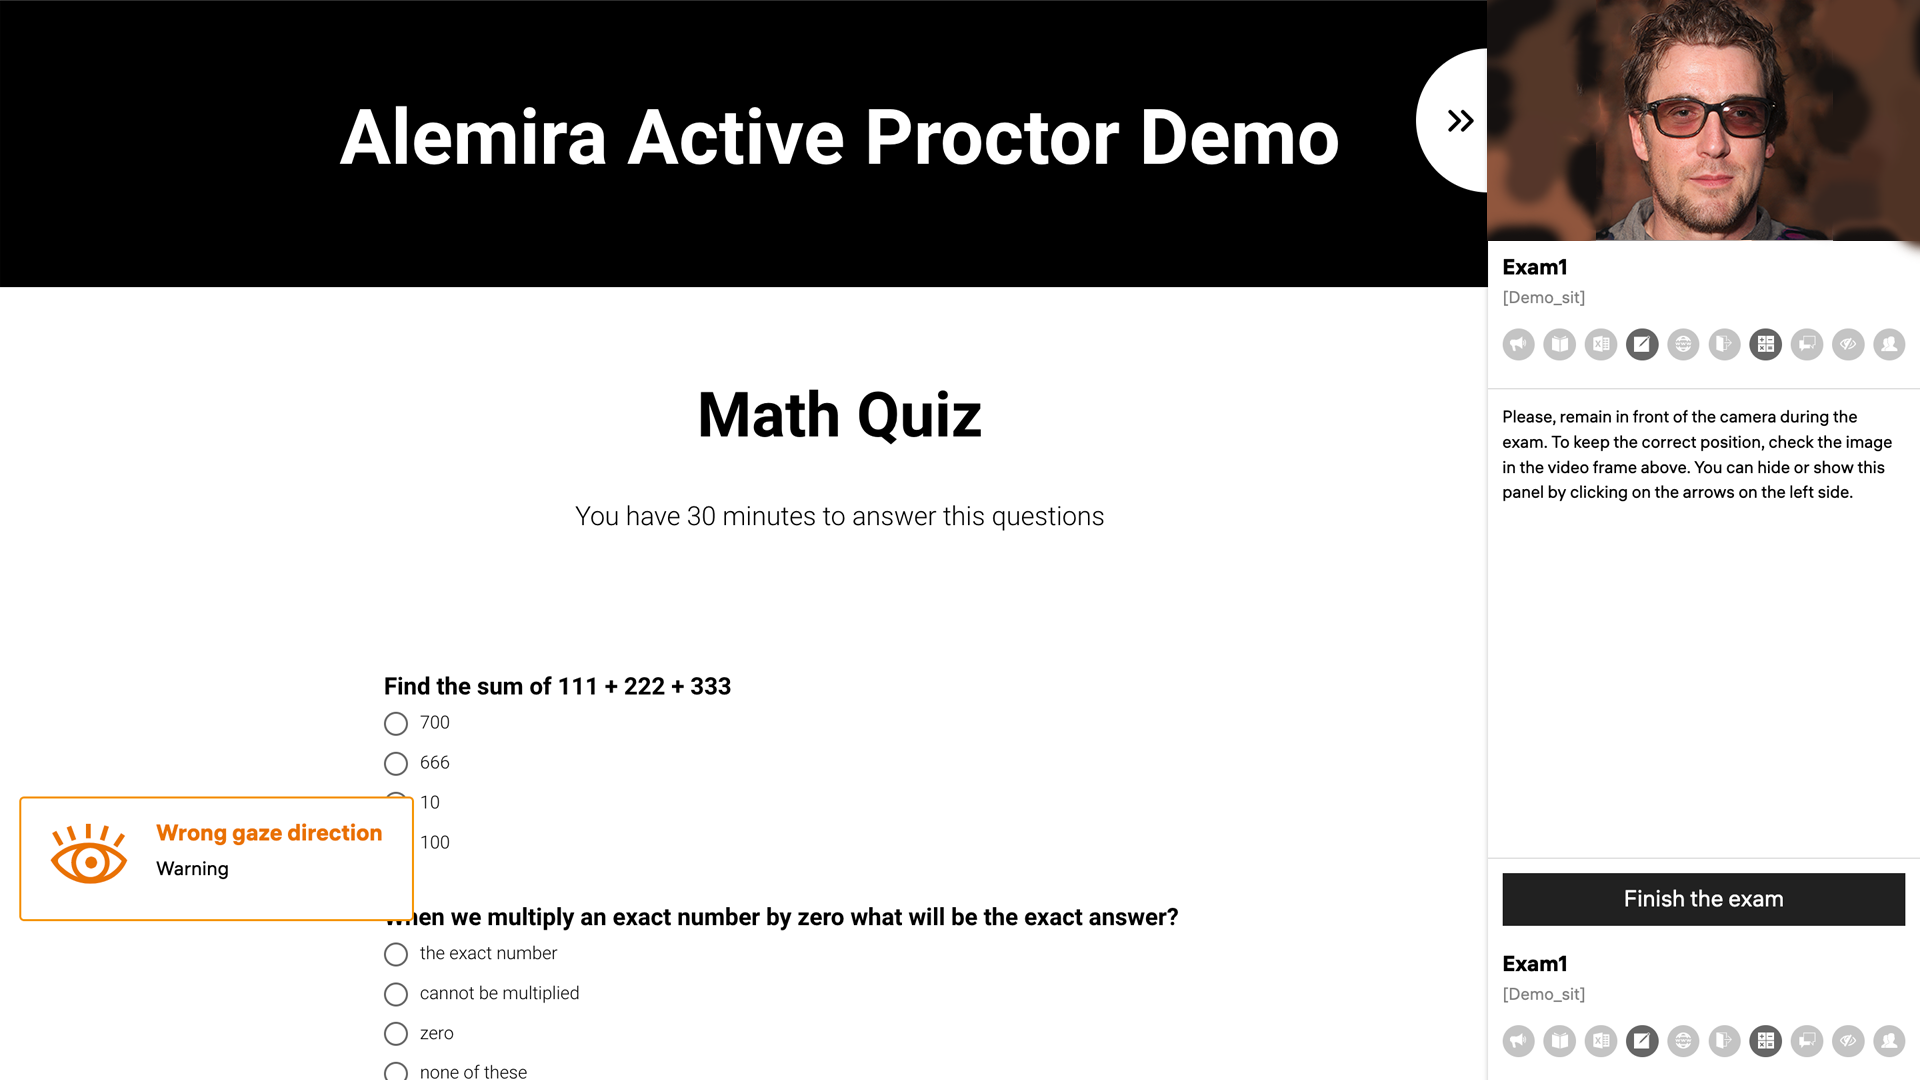 Alemira Proctor Software - Student flow